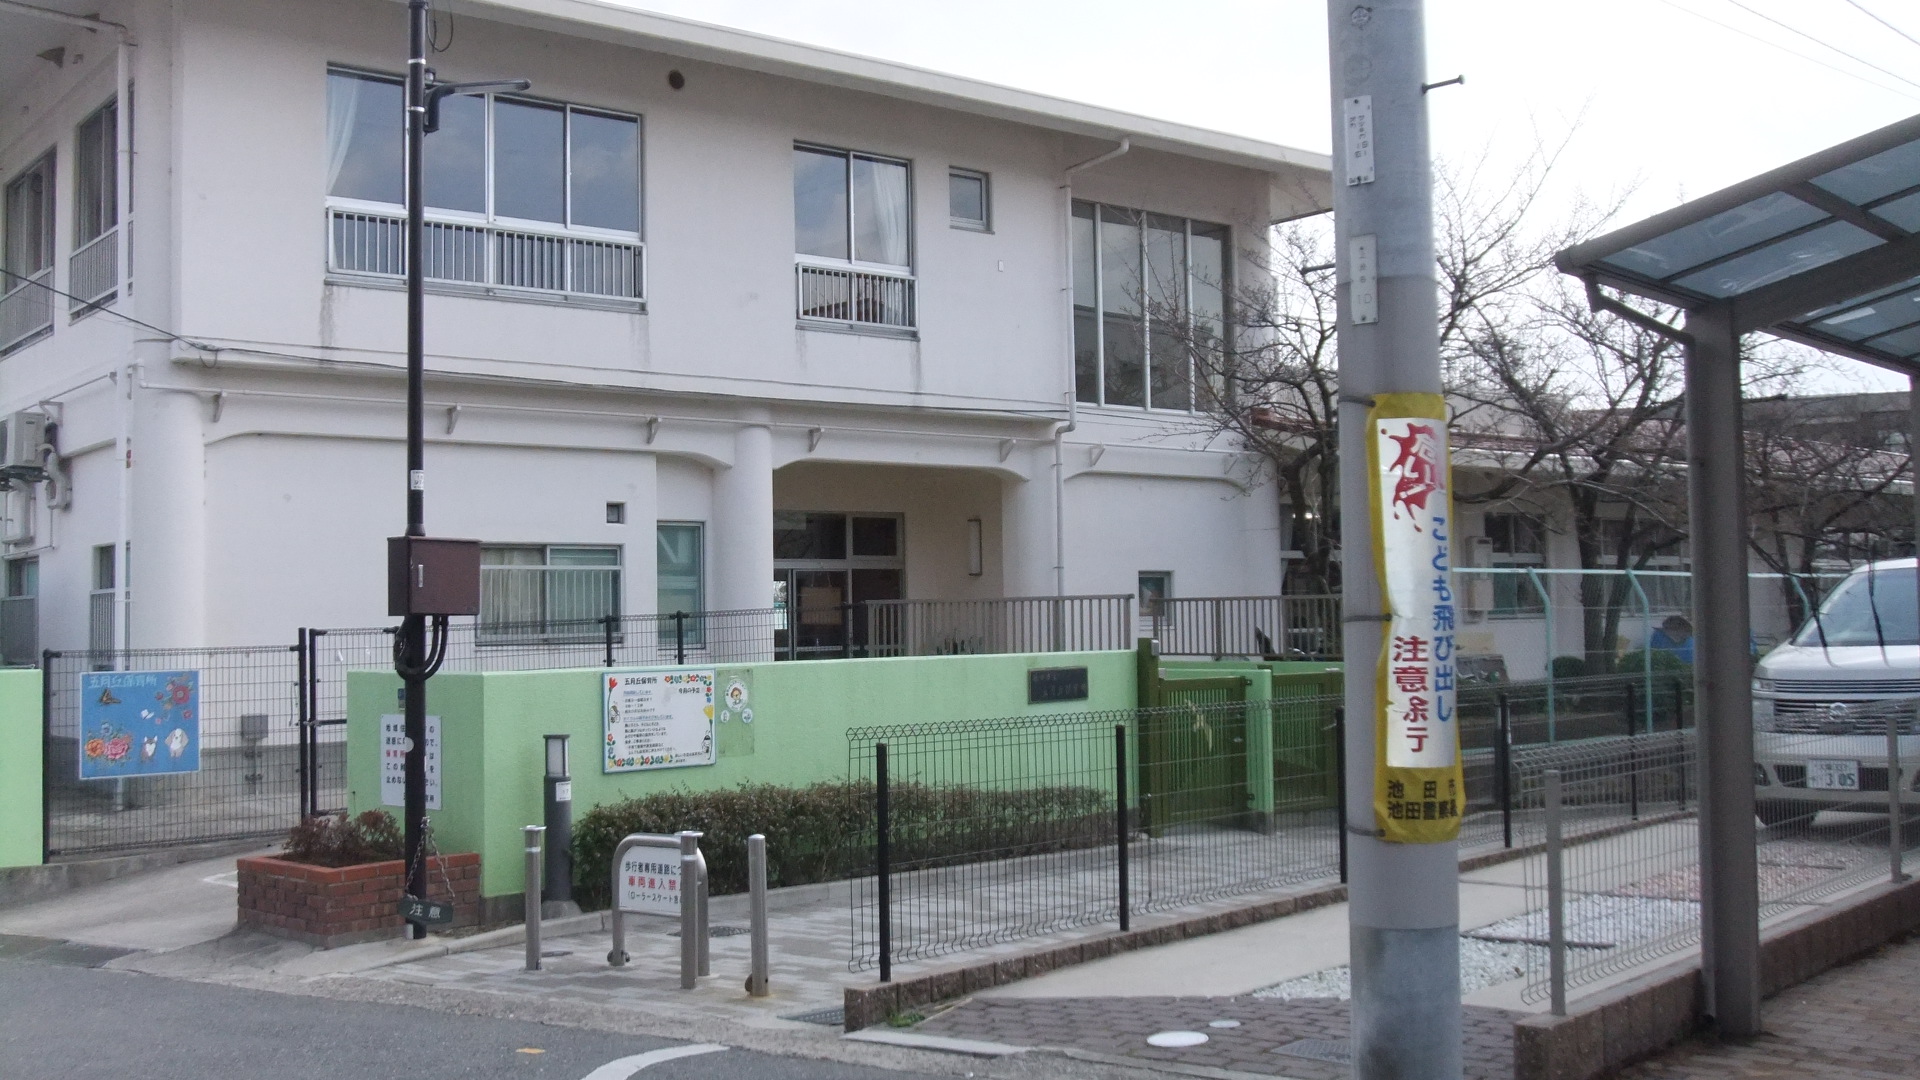 kindergarten ・ Nursery. Ikeda Municipal Satsukigaoka nursery school (kindergarten ・ 168m to the nursery)